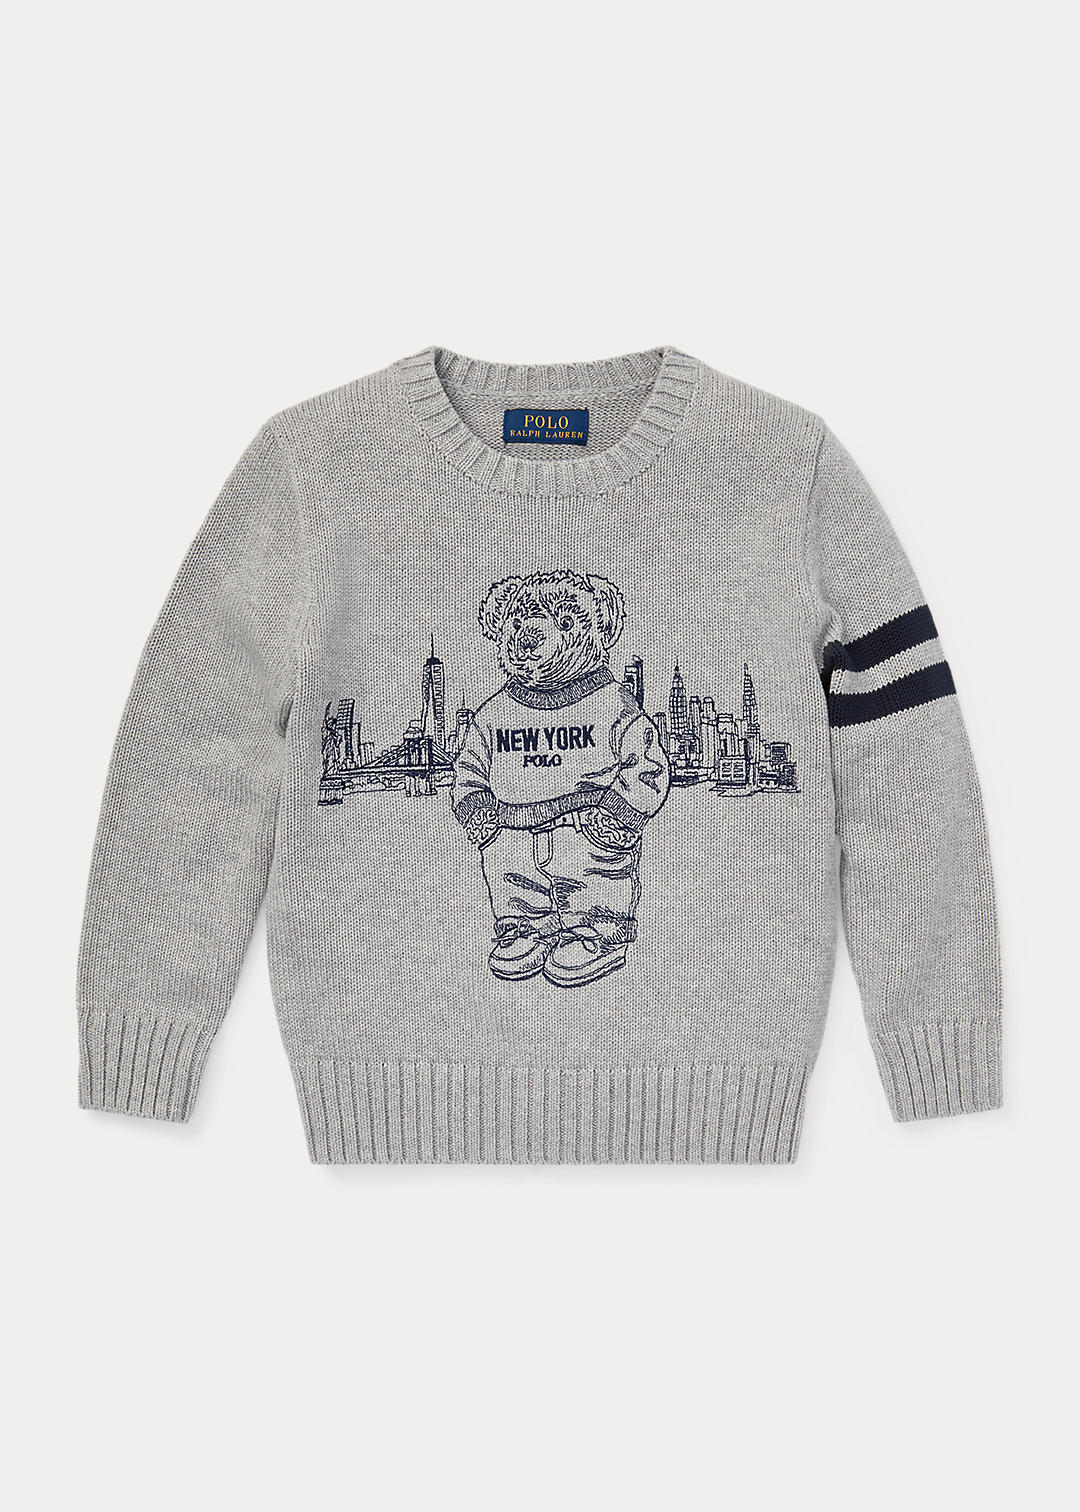 Polo Ralph Lauren New York NY Yankees MLB Fleece Baseball Bear Sweater Youth  XL